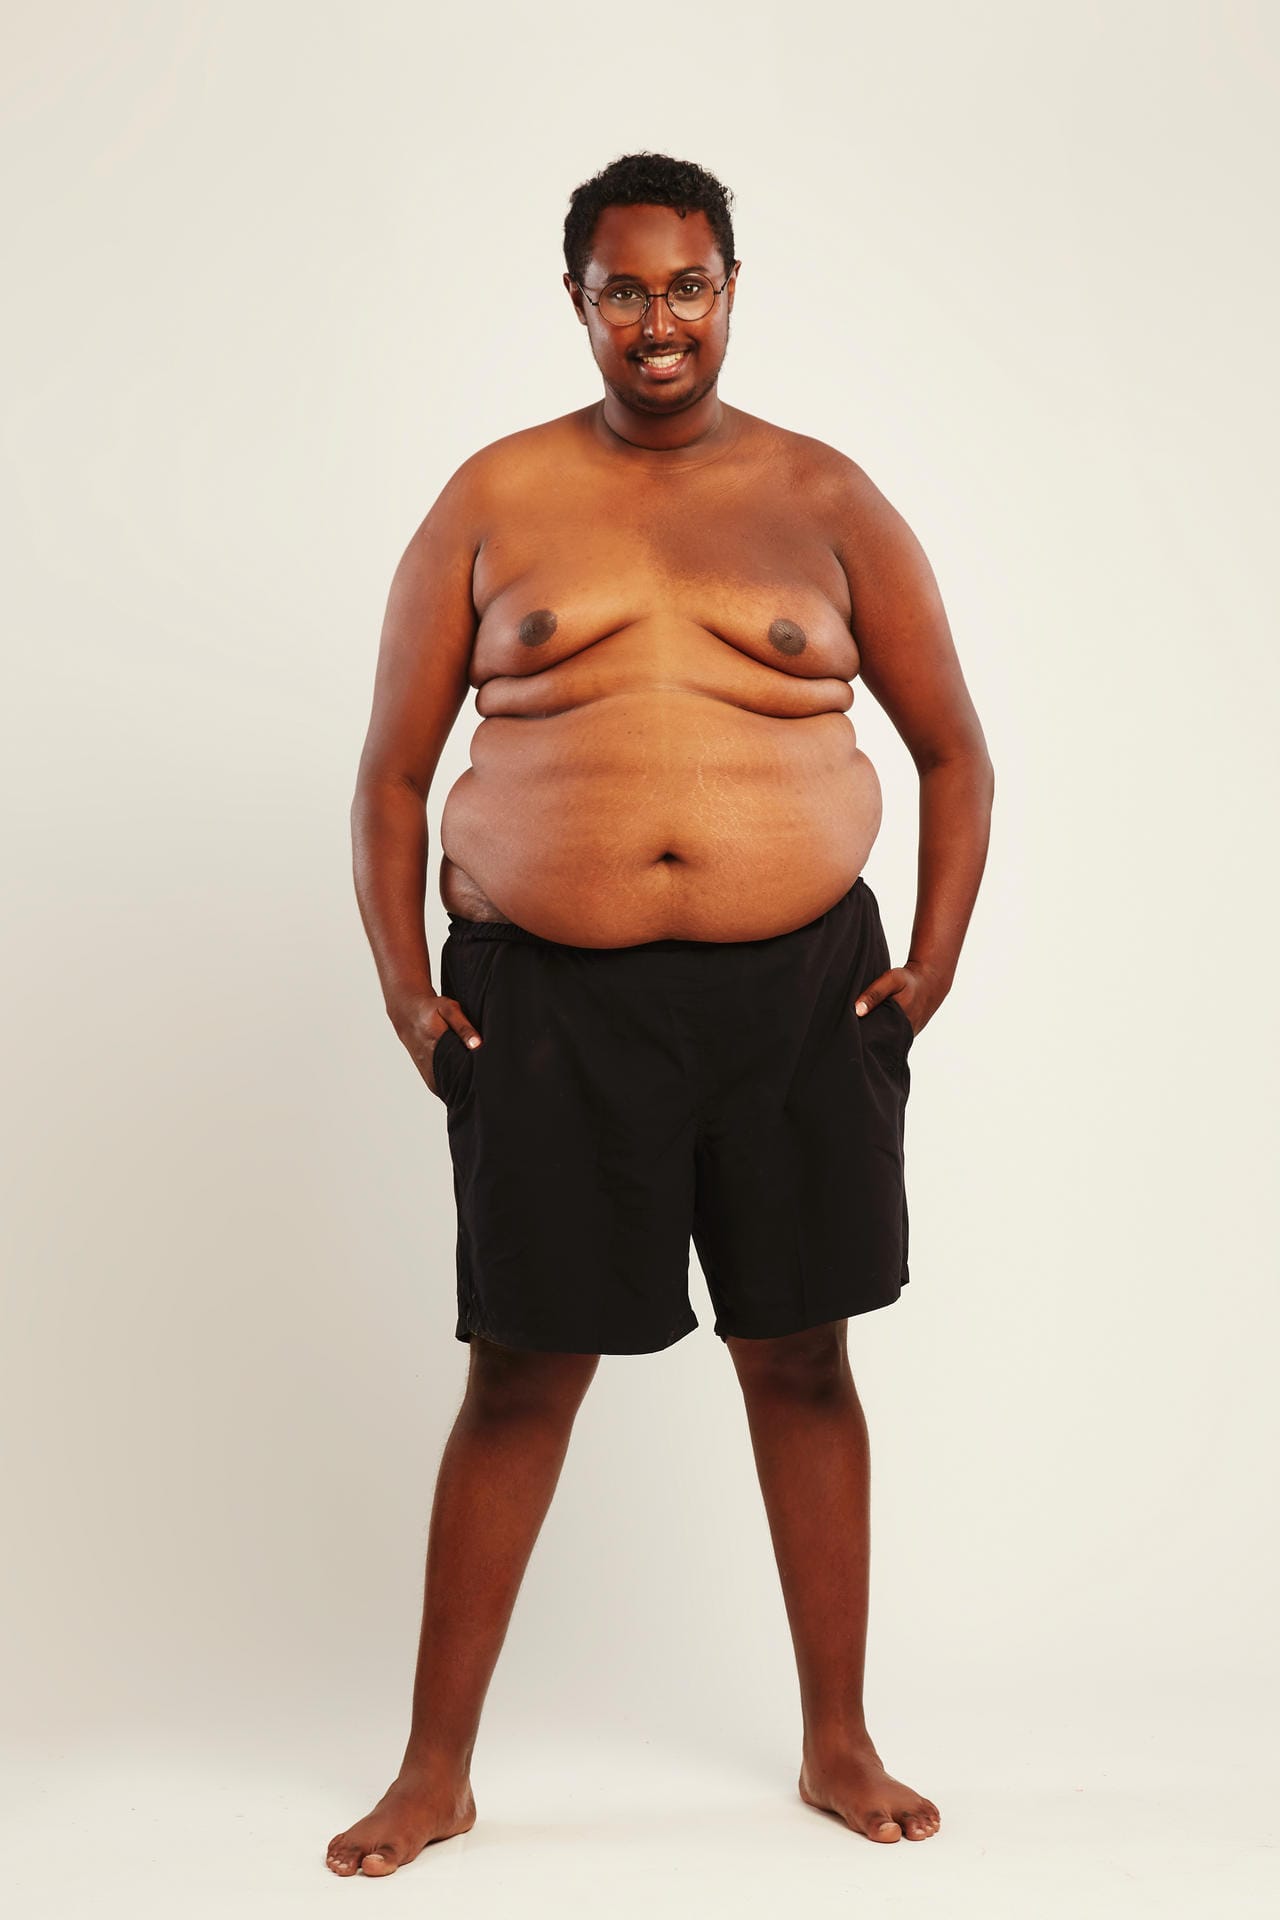 Abdi wog vor dem Staffelbeginn 143,7 Kilo.